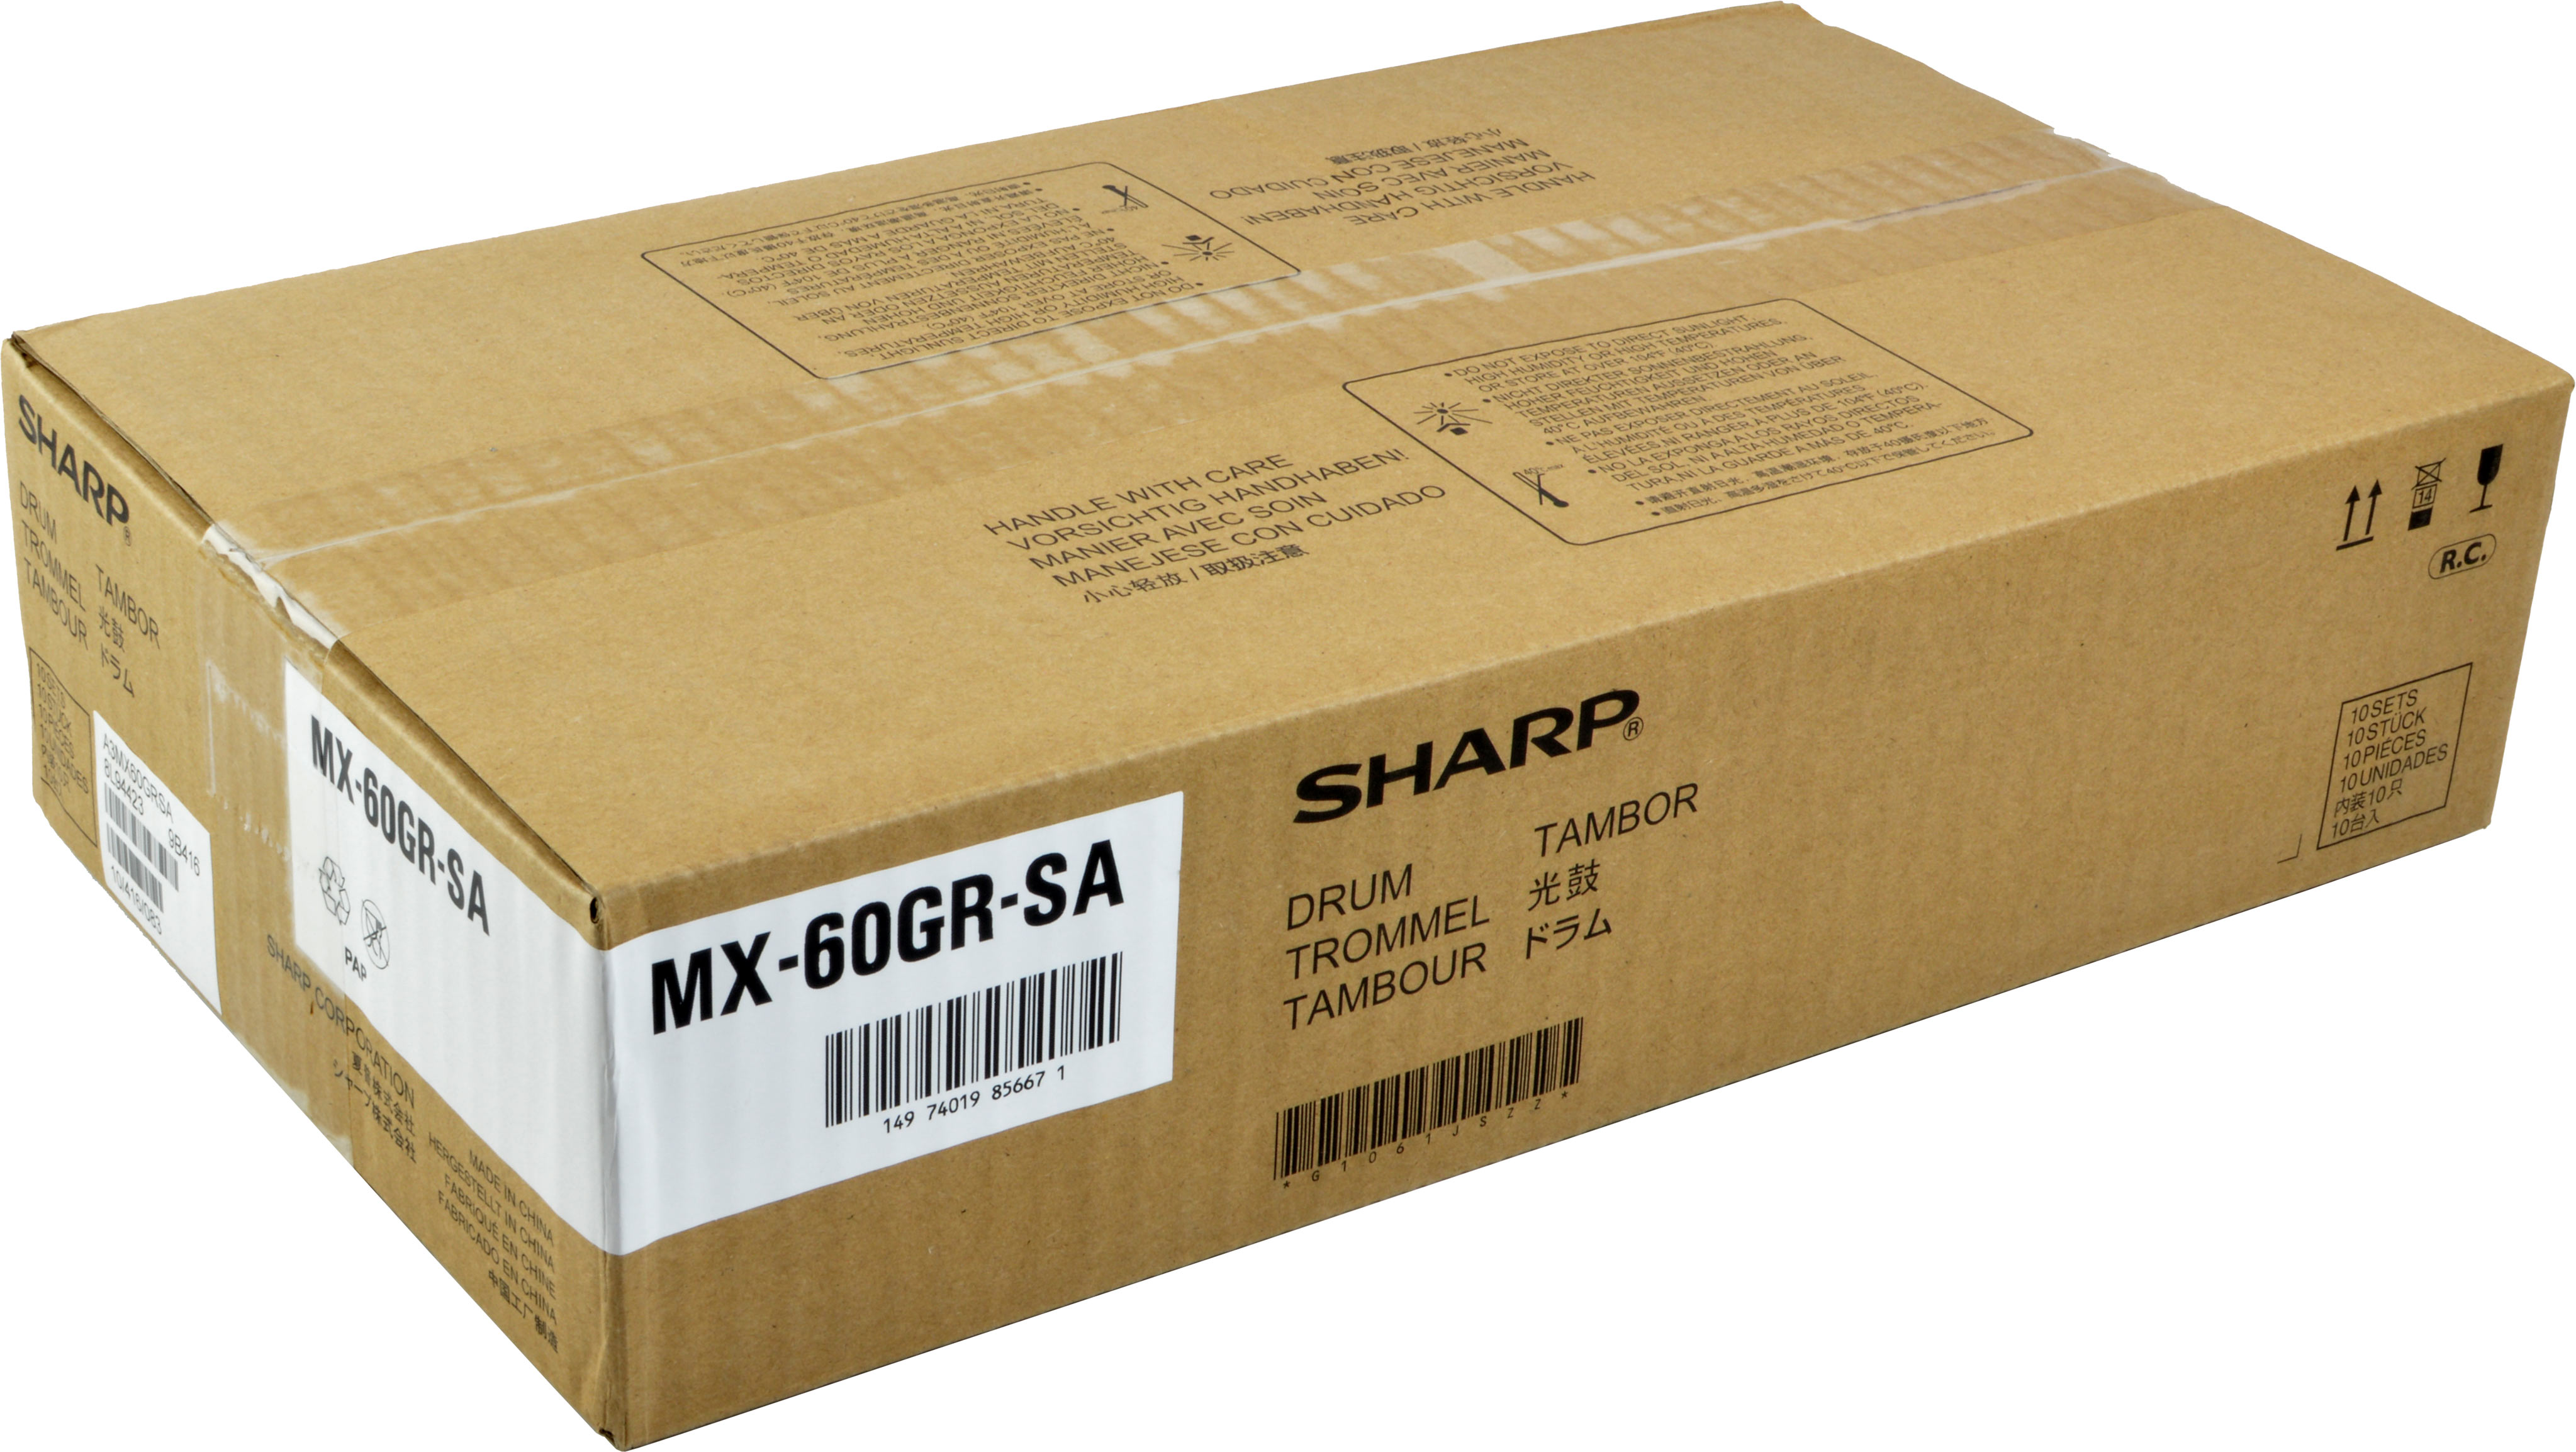 Sharp Trommel MX-60GRSA